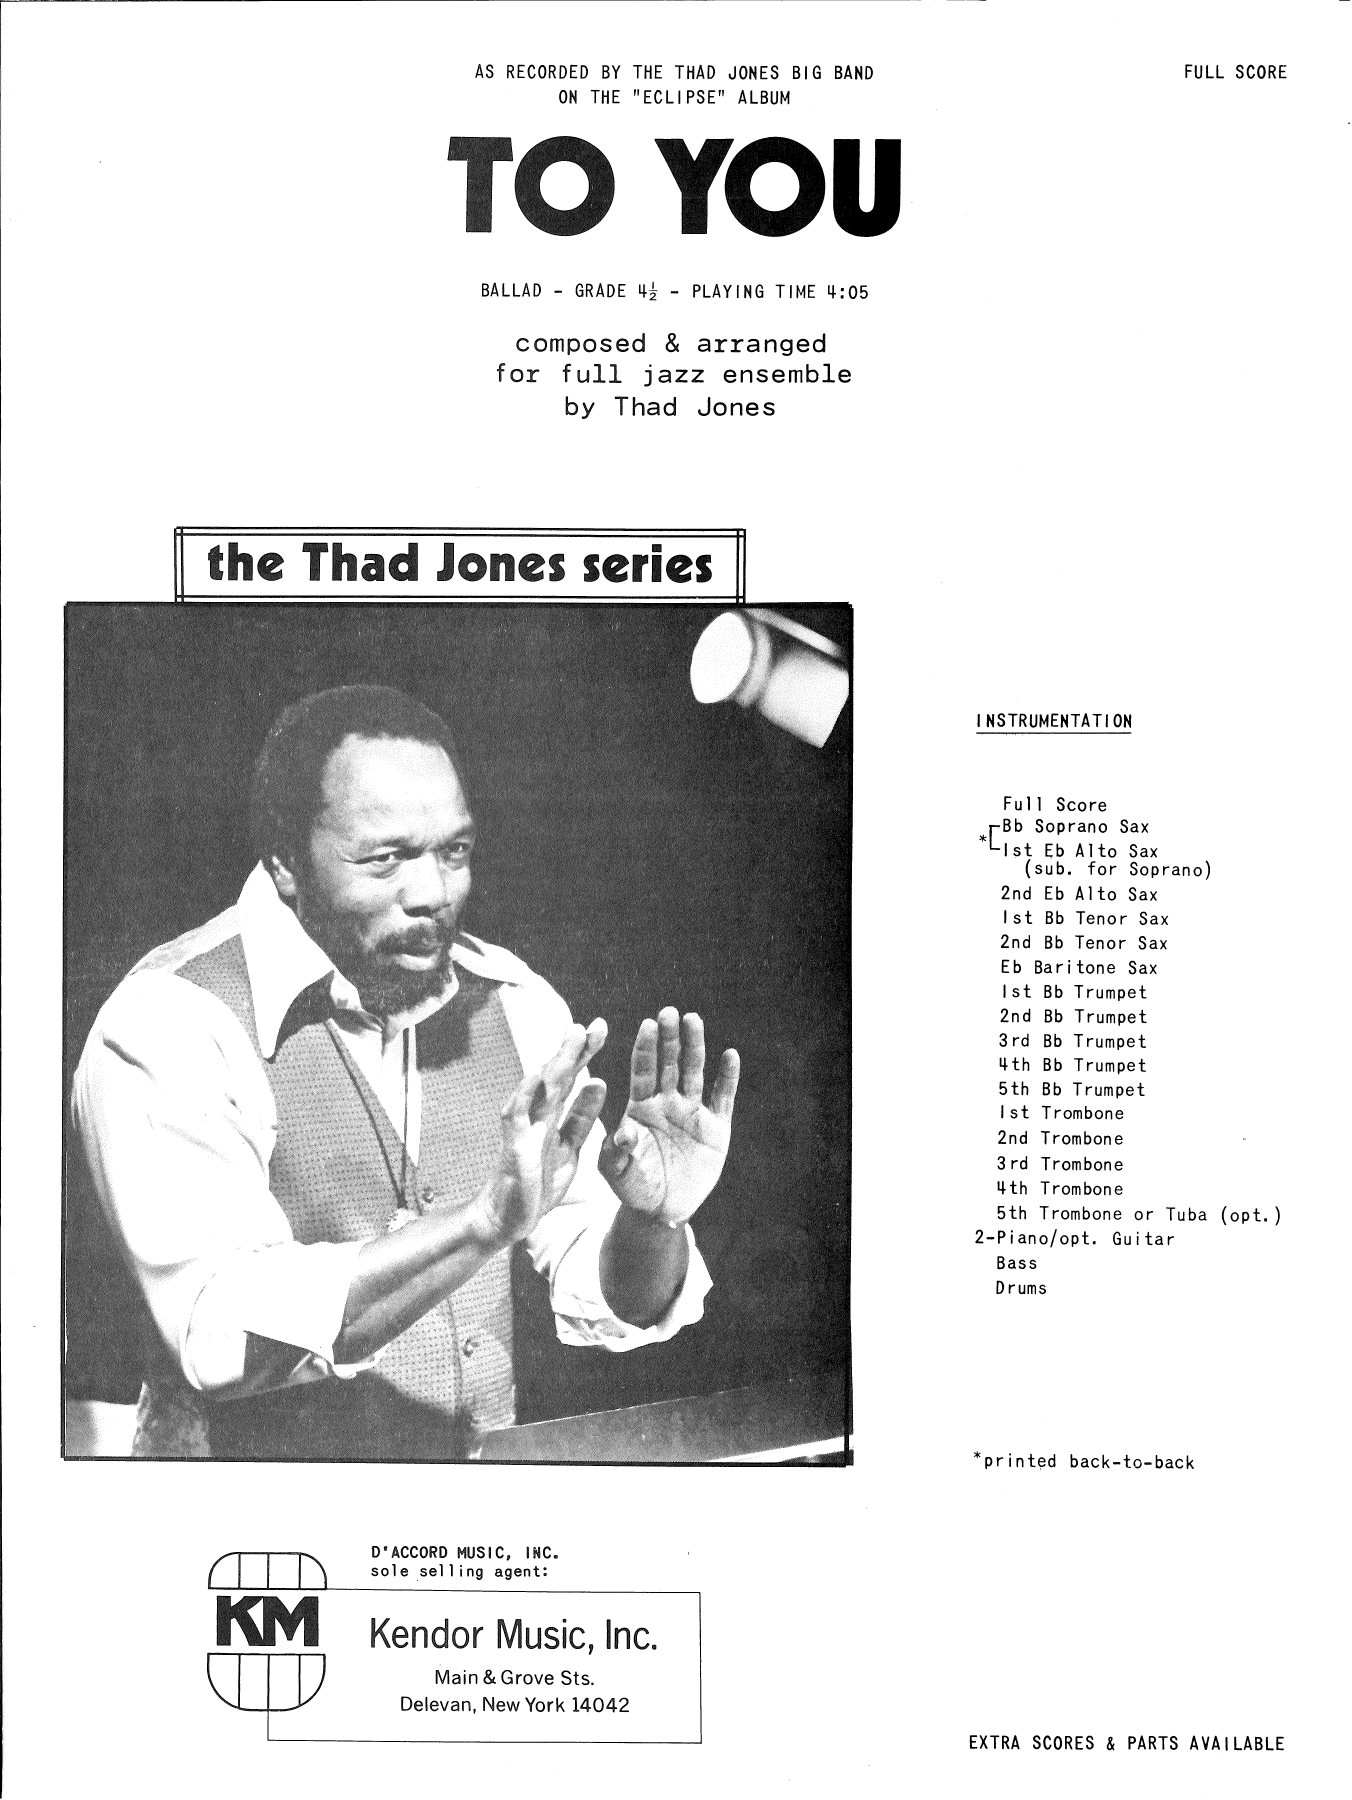 Download Thad Jones To You - Full Score Sheet Music